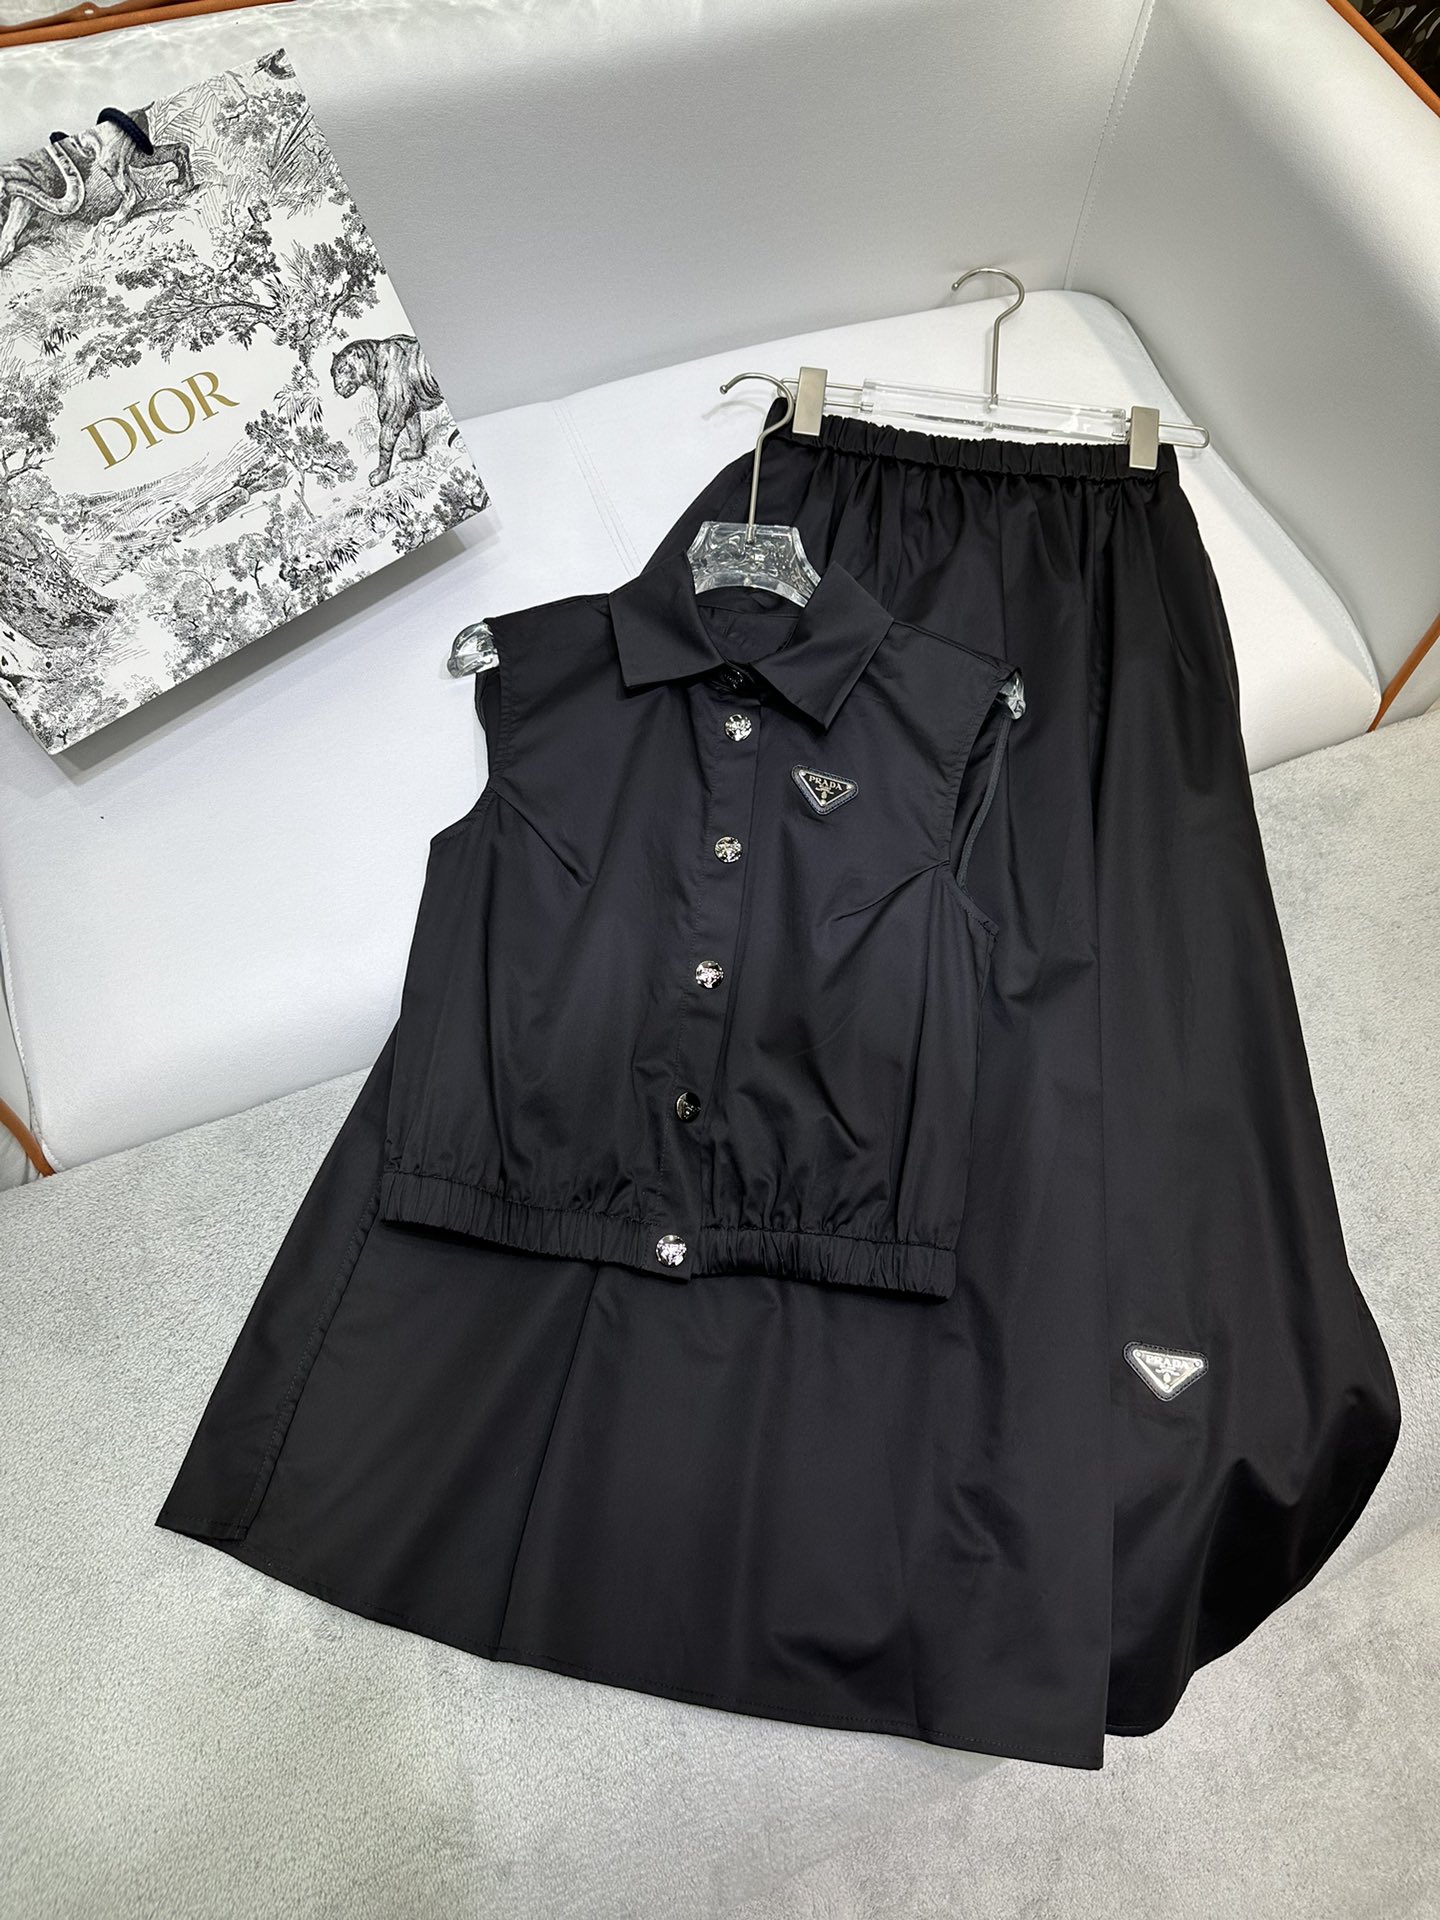 Prada Clothing Shirts & Blouses Skirts Waistcoats Summer Collection Fashion